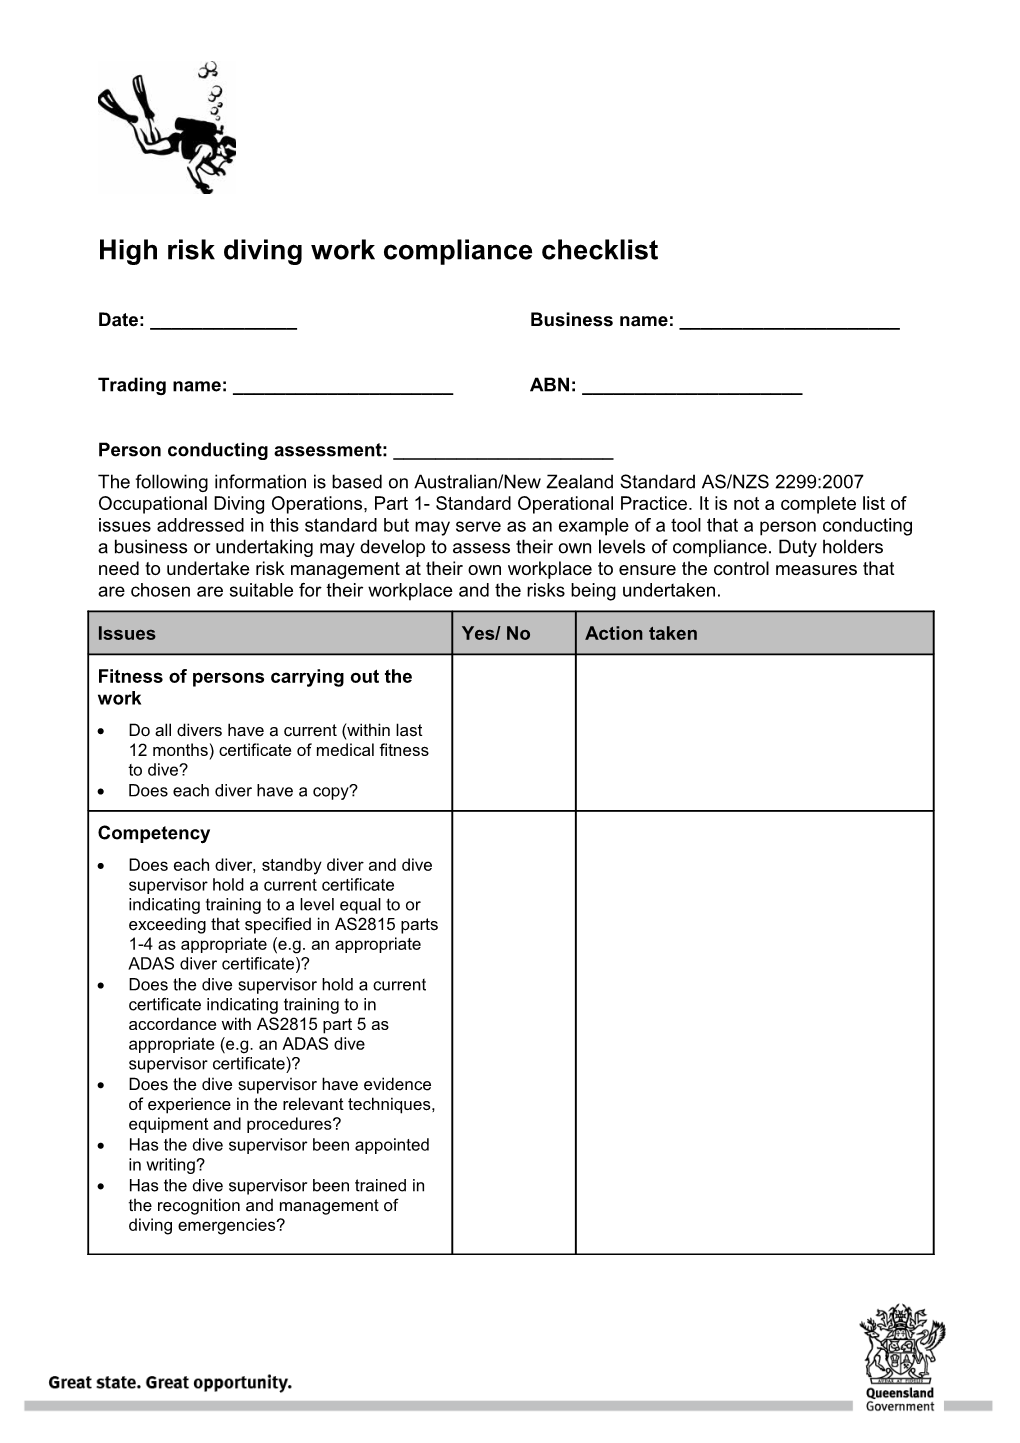 High Risk Diving Work Compliance Checklist